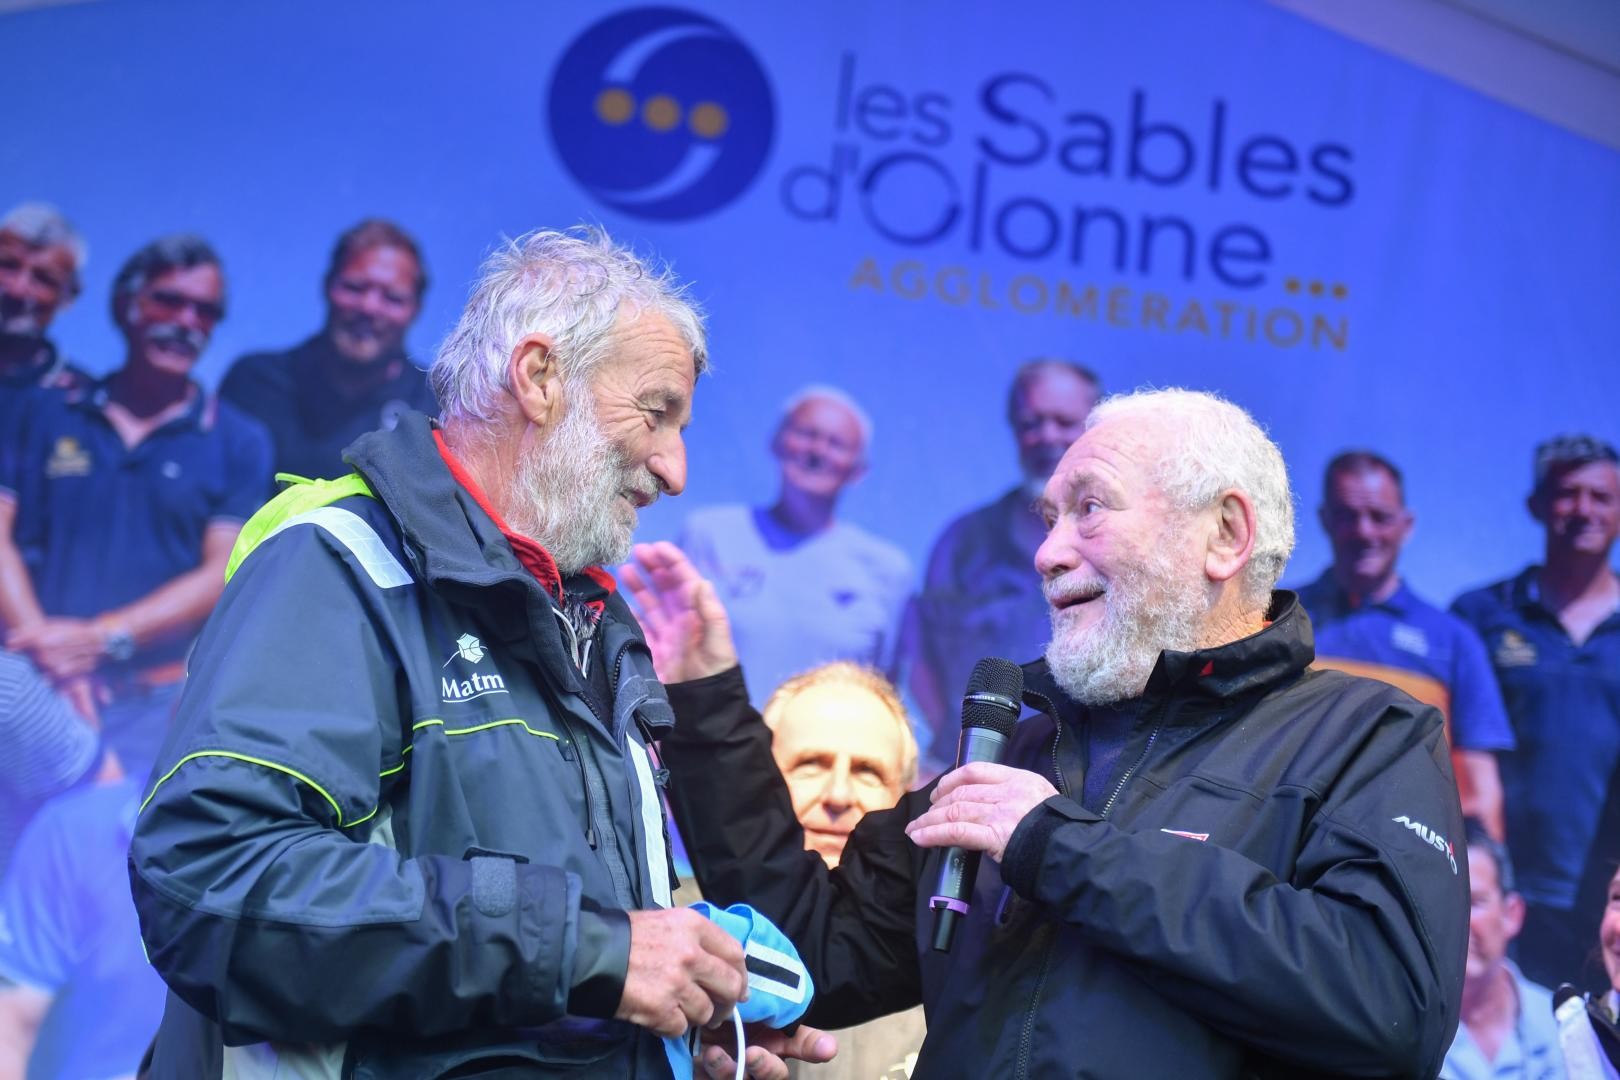 Jean-Luc Van Den Heede (left) being congratulated by Sir Robin Knox-Johnston after winning the 2018/19 Golden Globe Race. Photo credit: Christophe Favreau/PPL/GGR